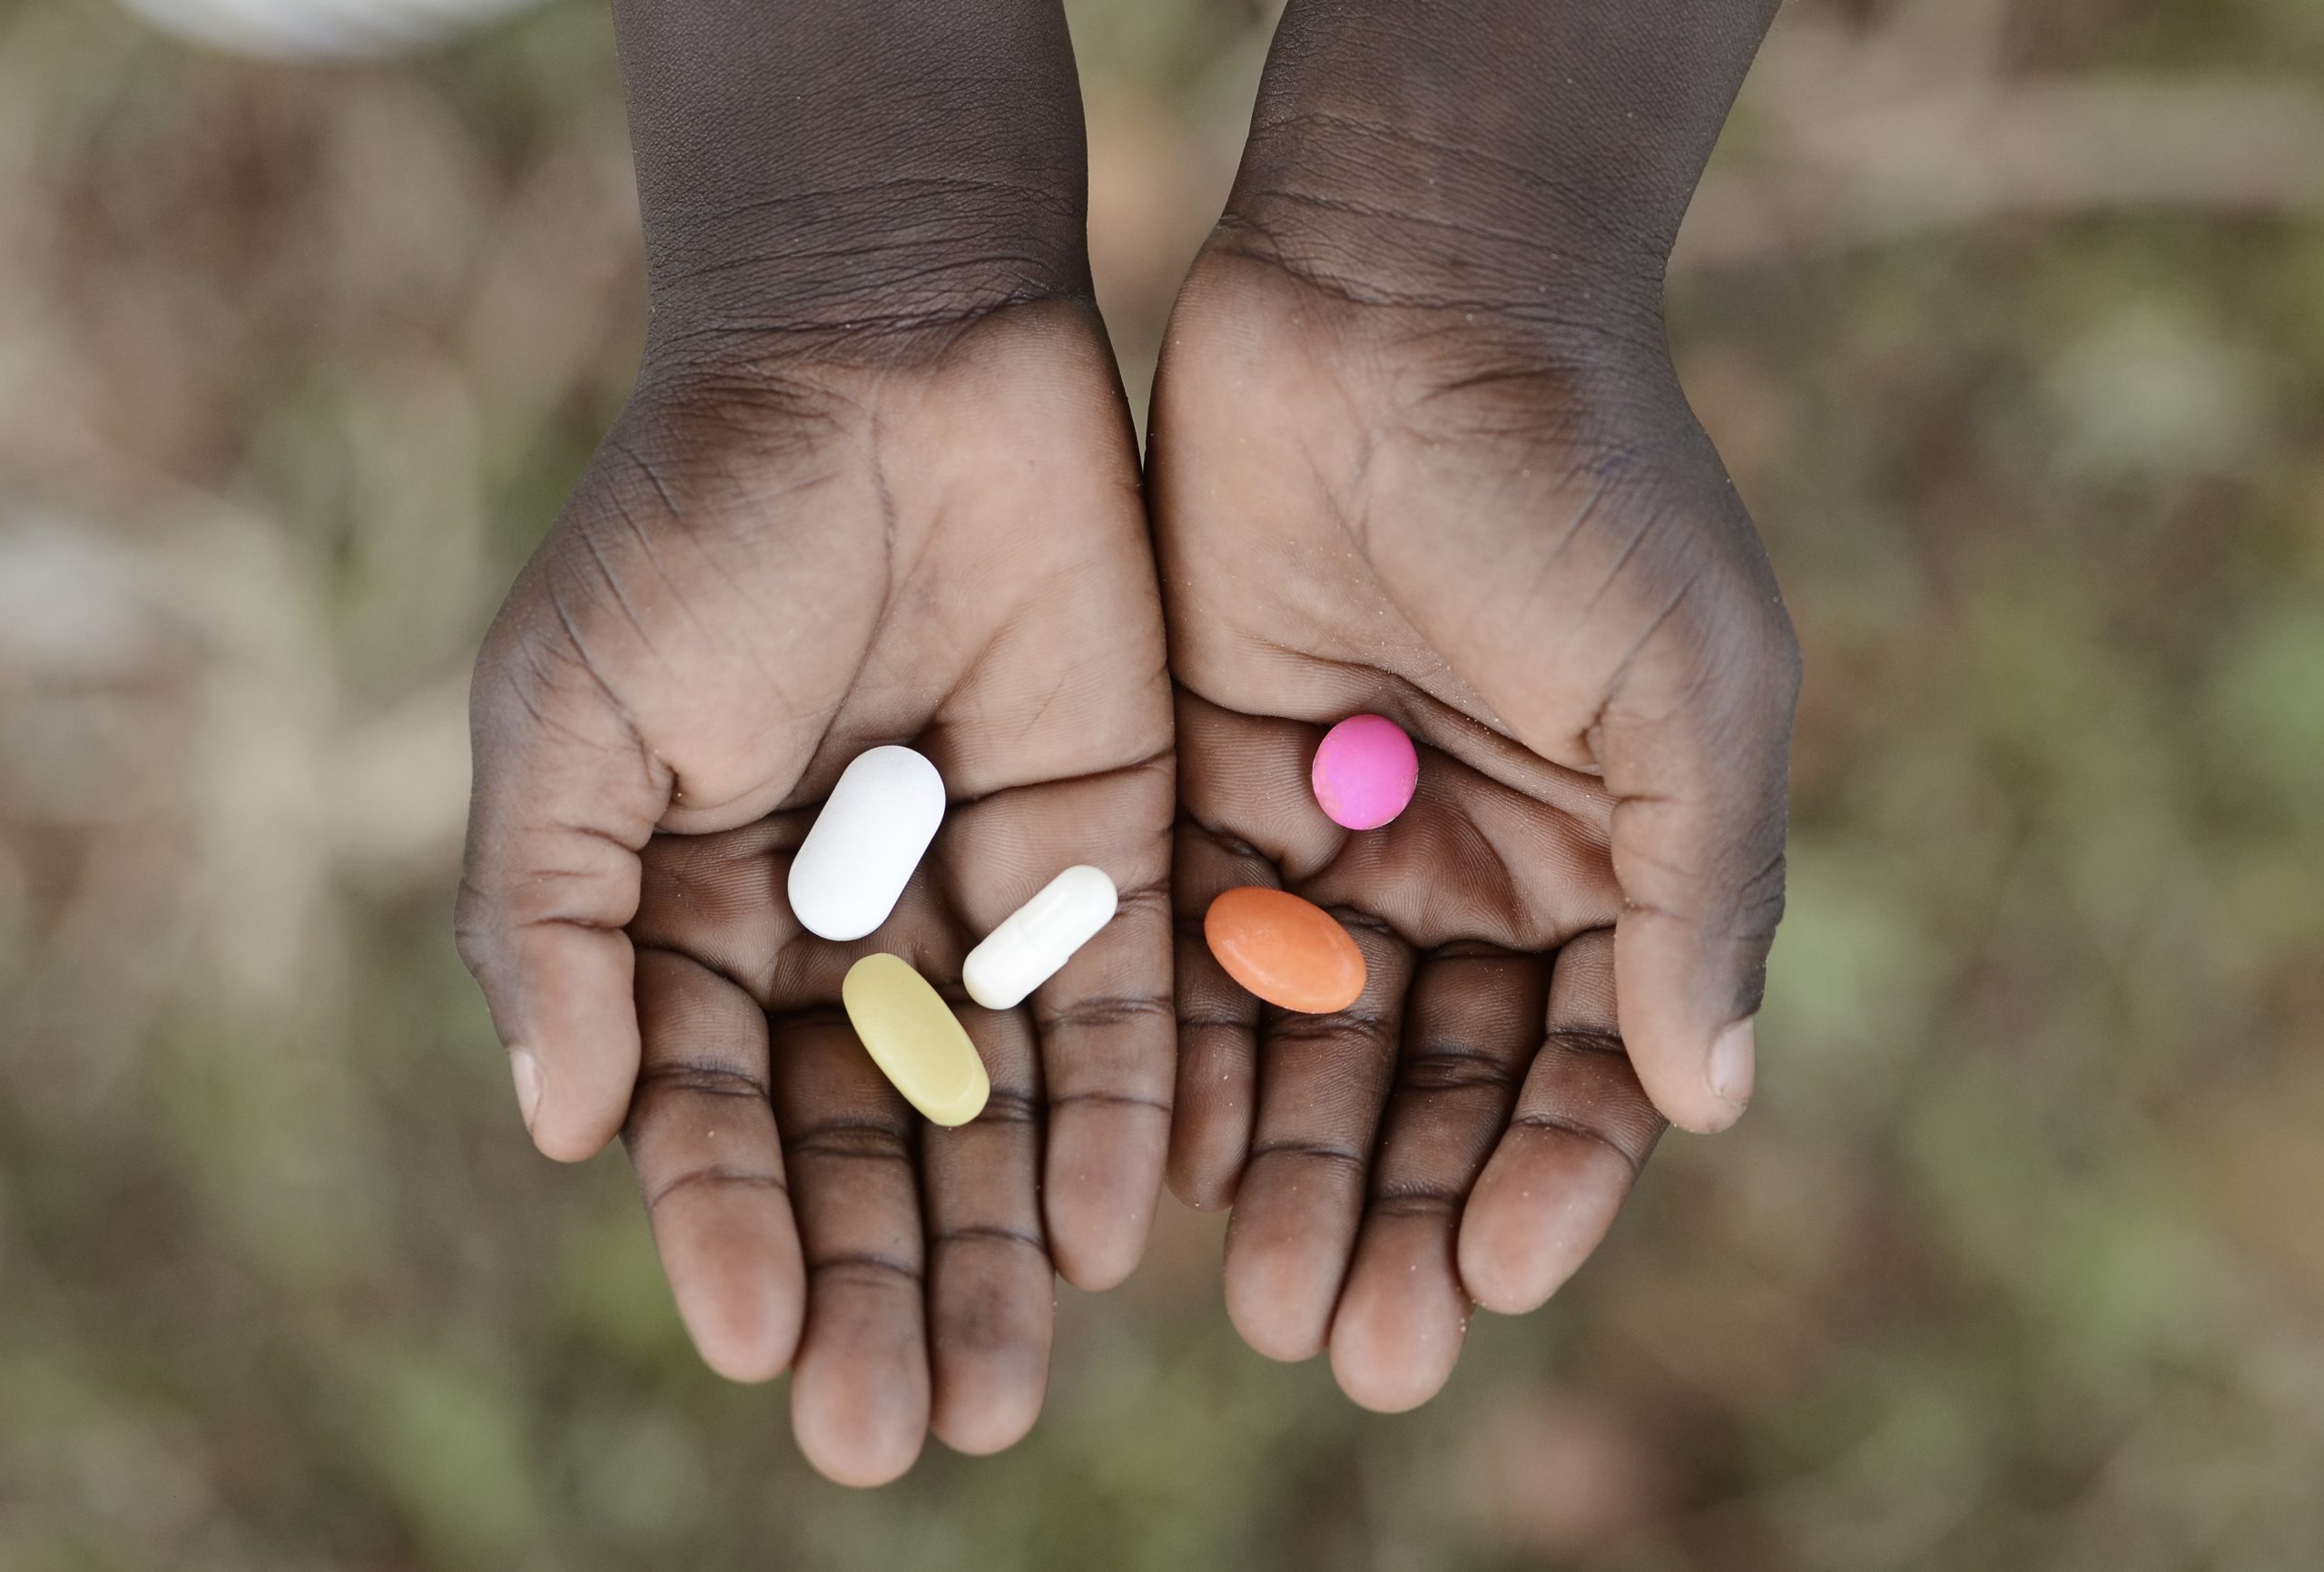 Curing,Malaria,-,African,Girl,Holding,Pills,Medicine,Health,Symbol.